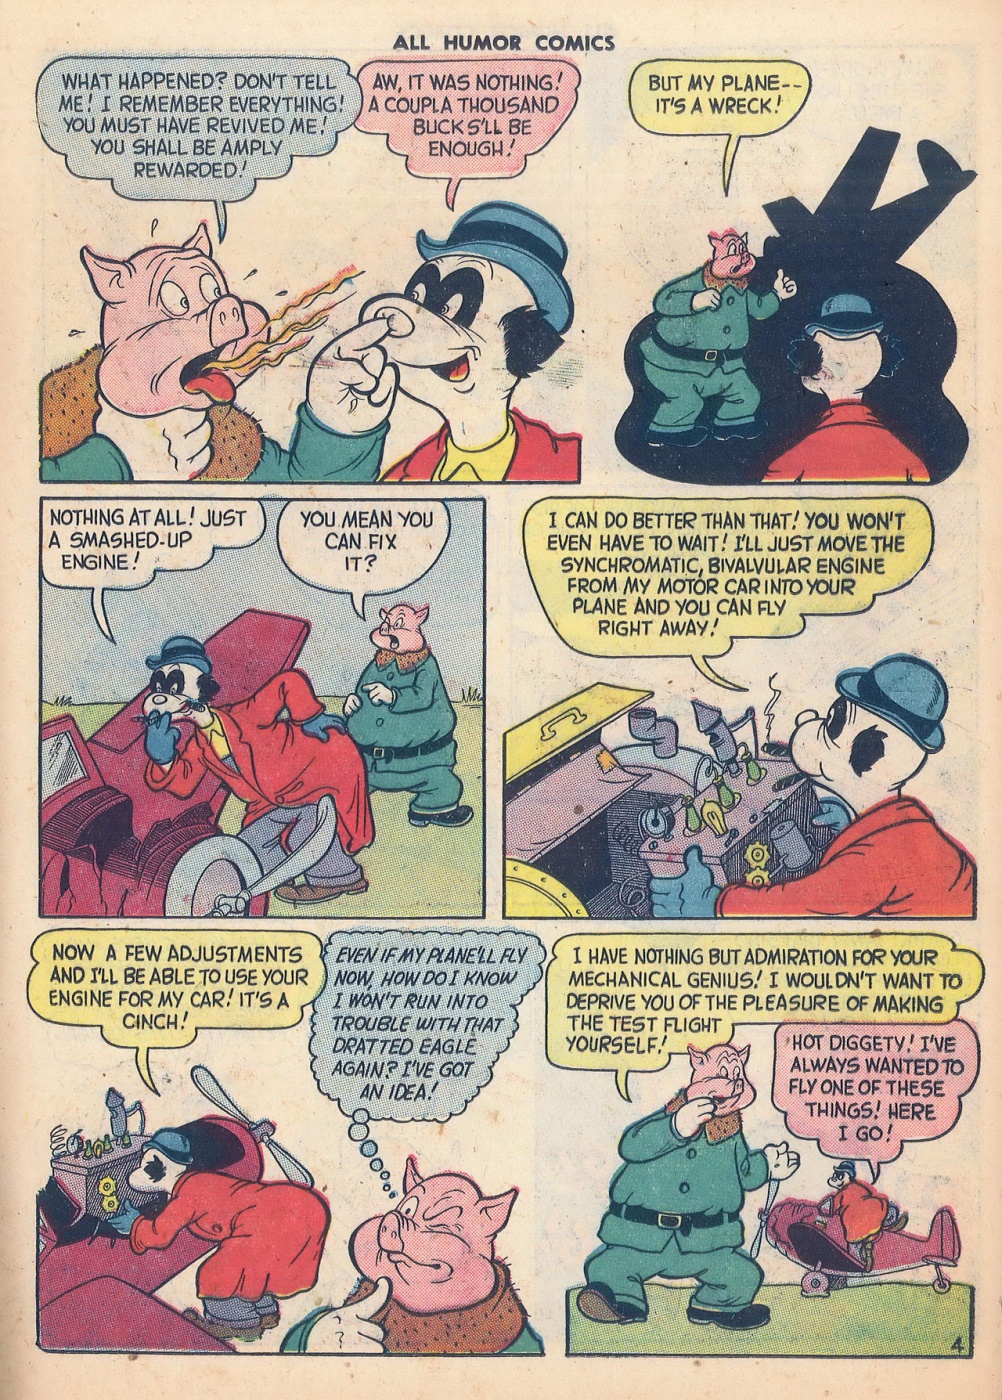 All-Humor-Comics g (23)